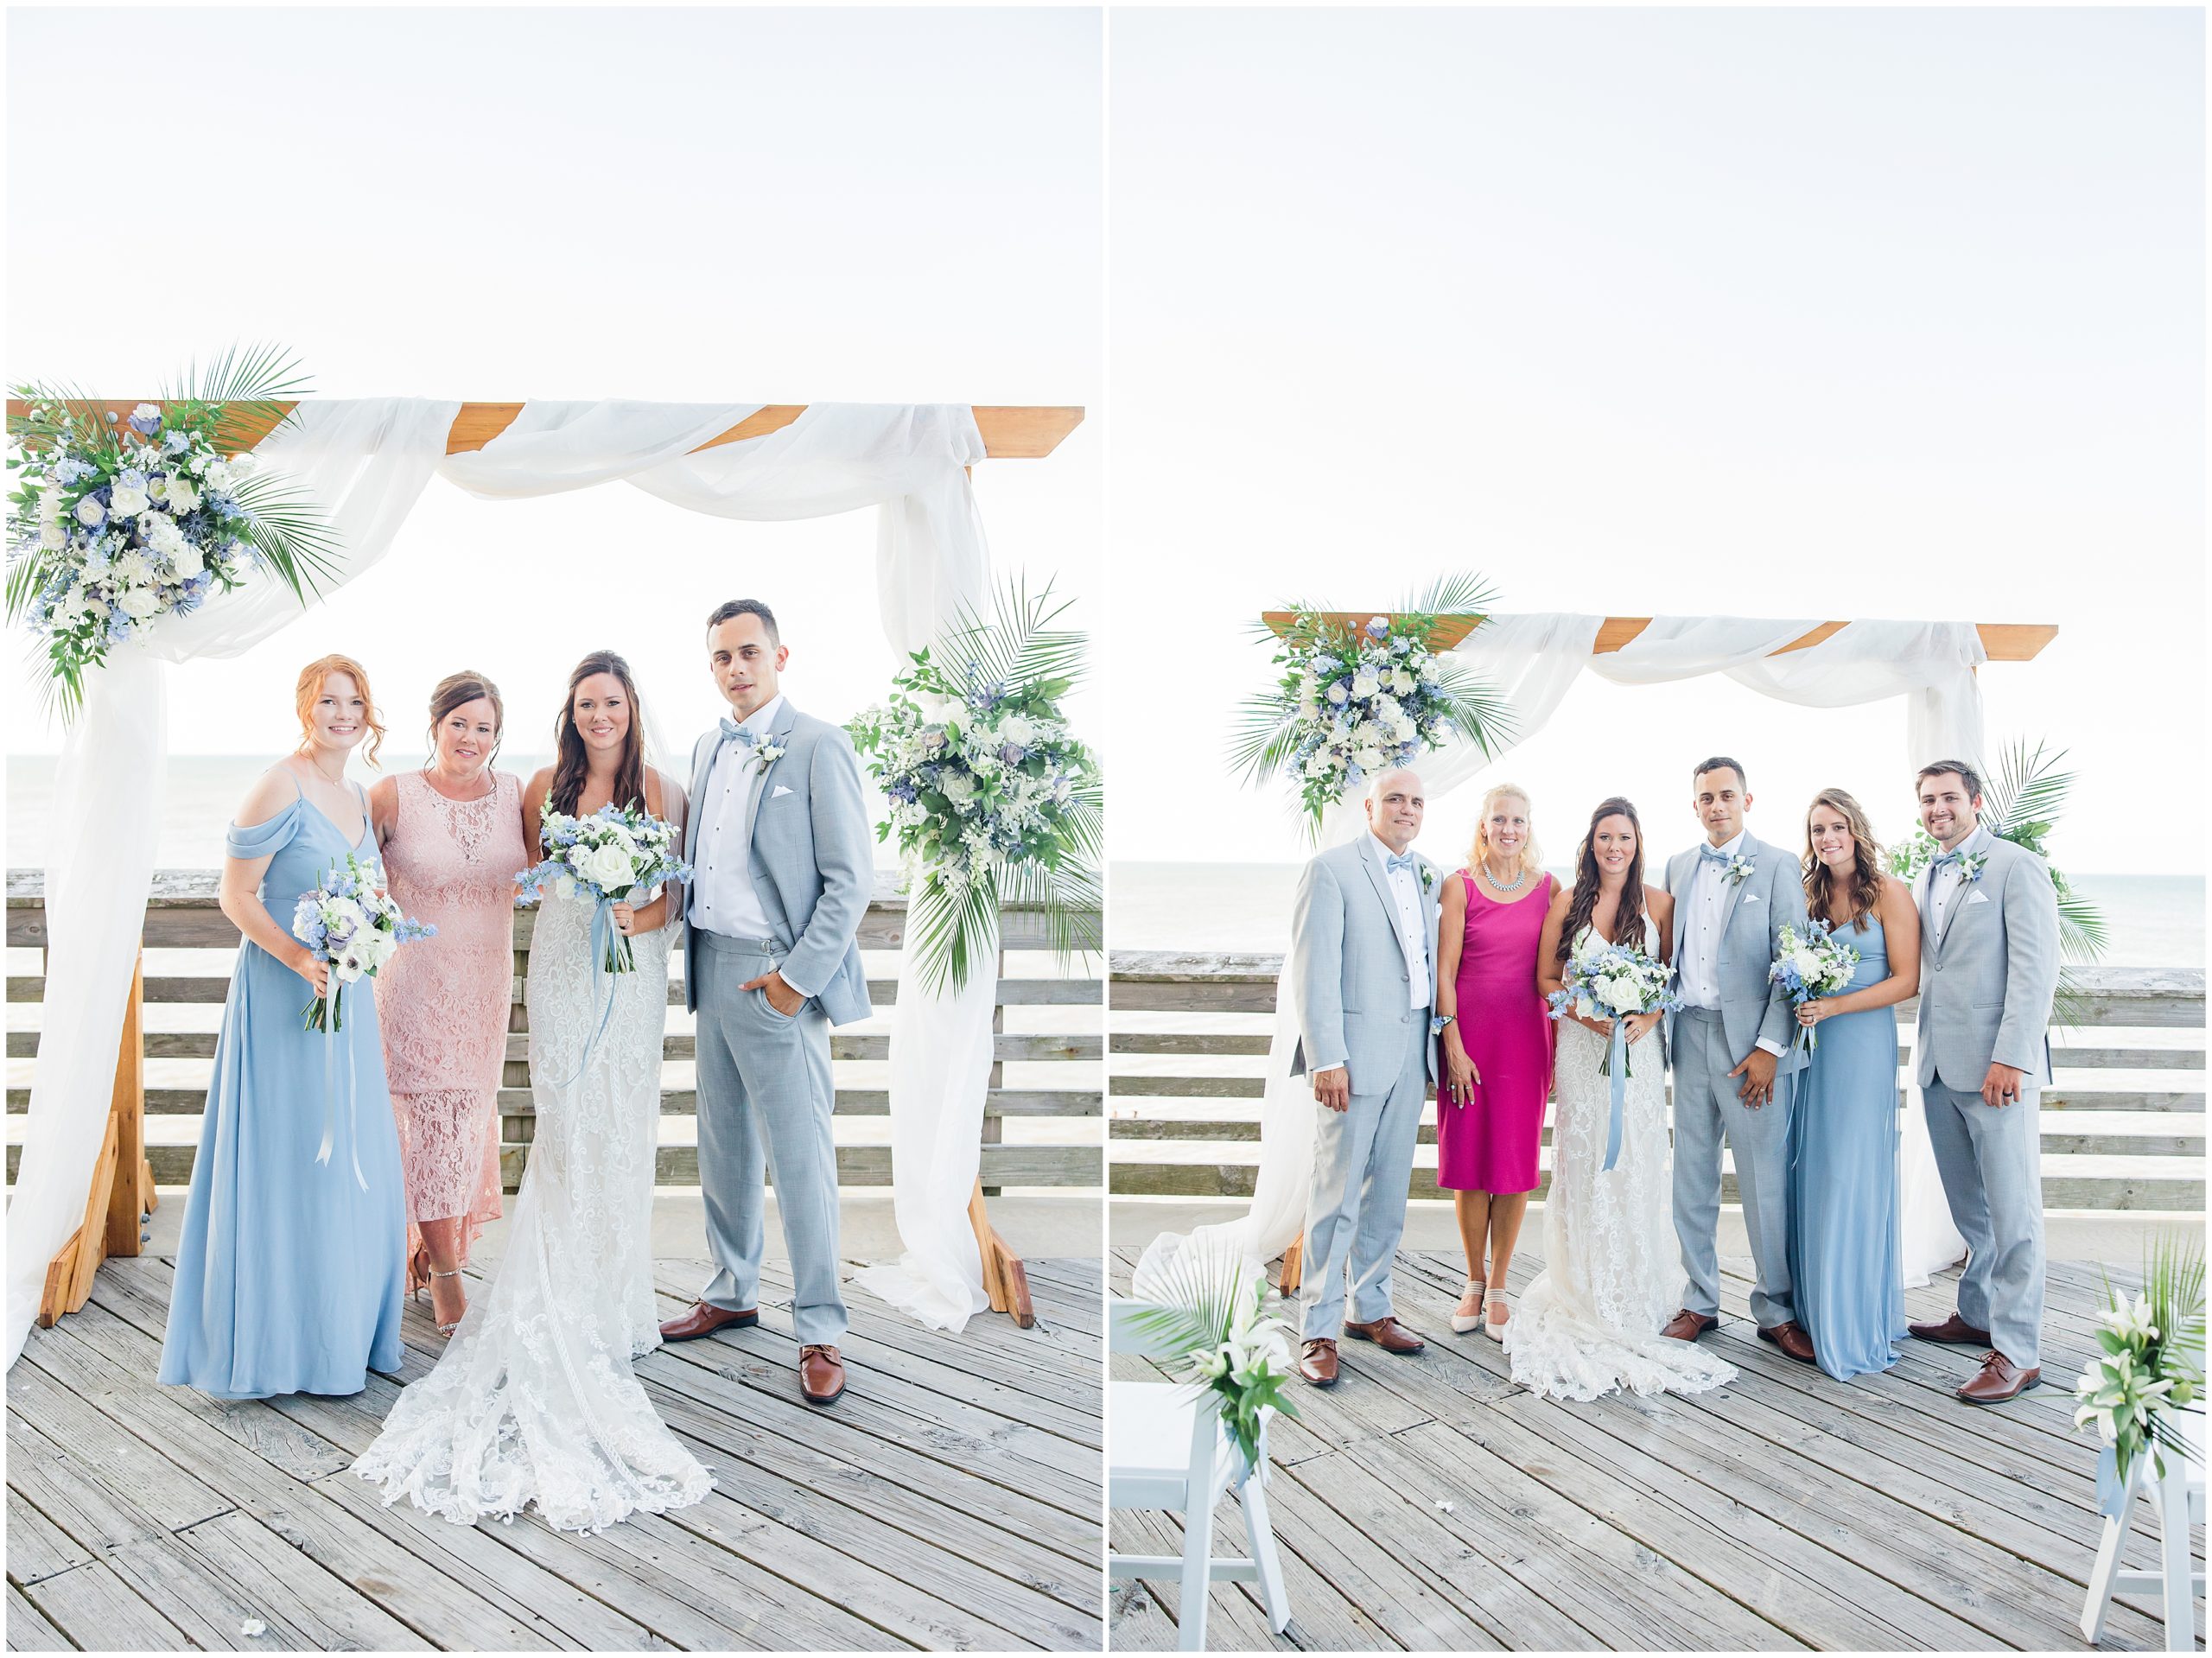 Jennette's Pier wedding day family formals along pier